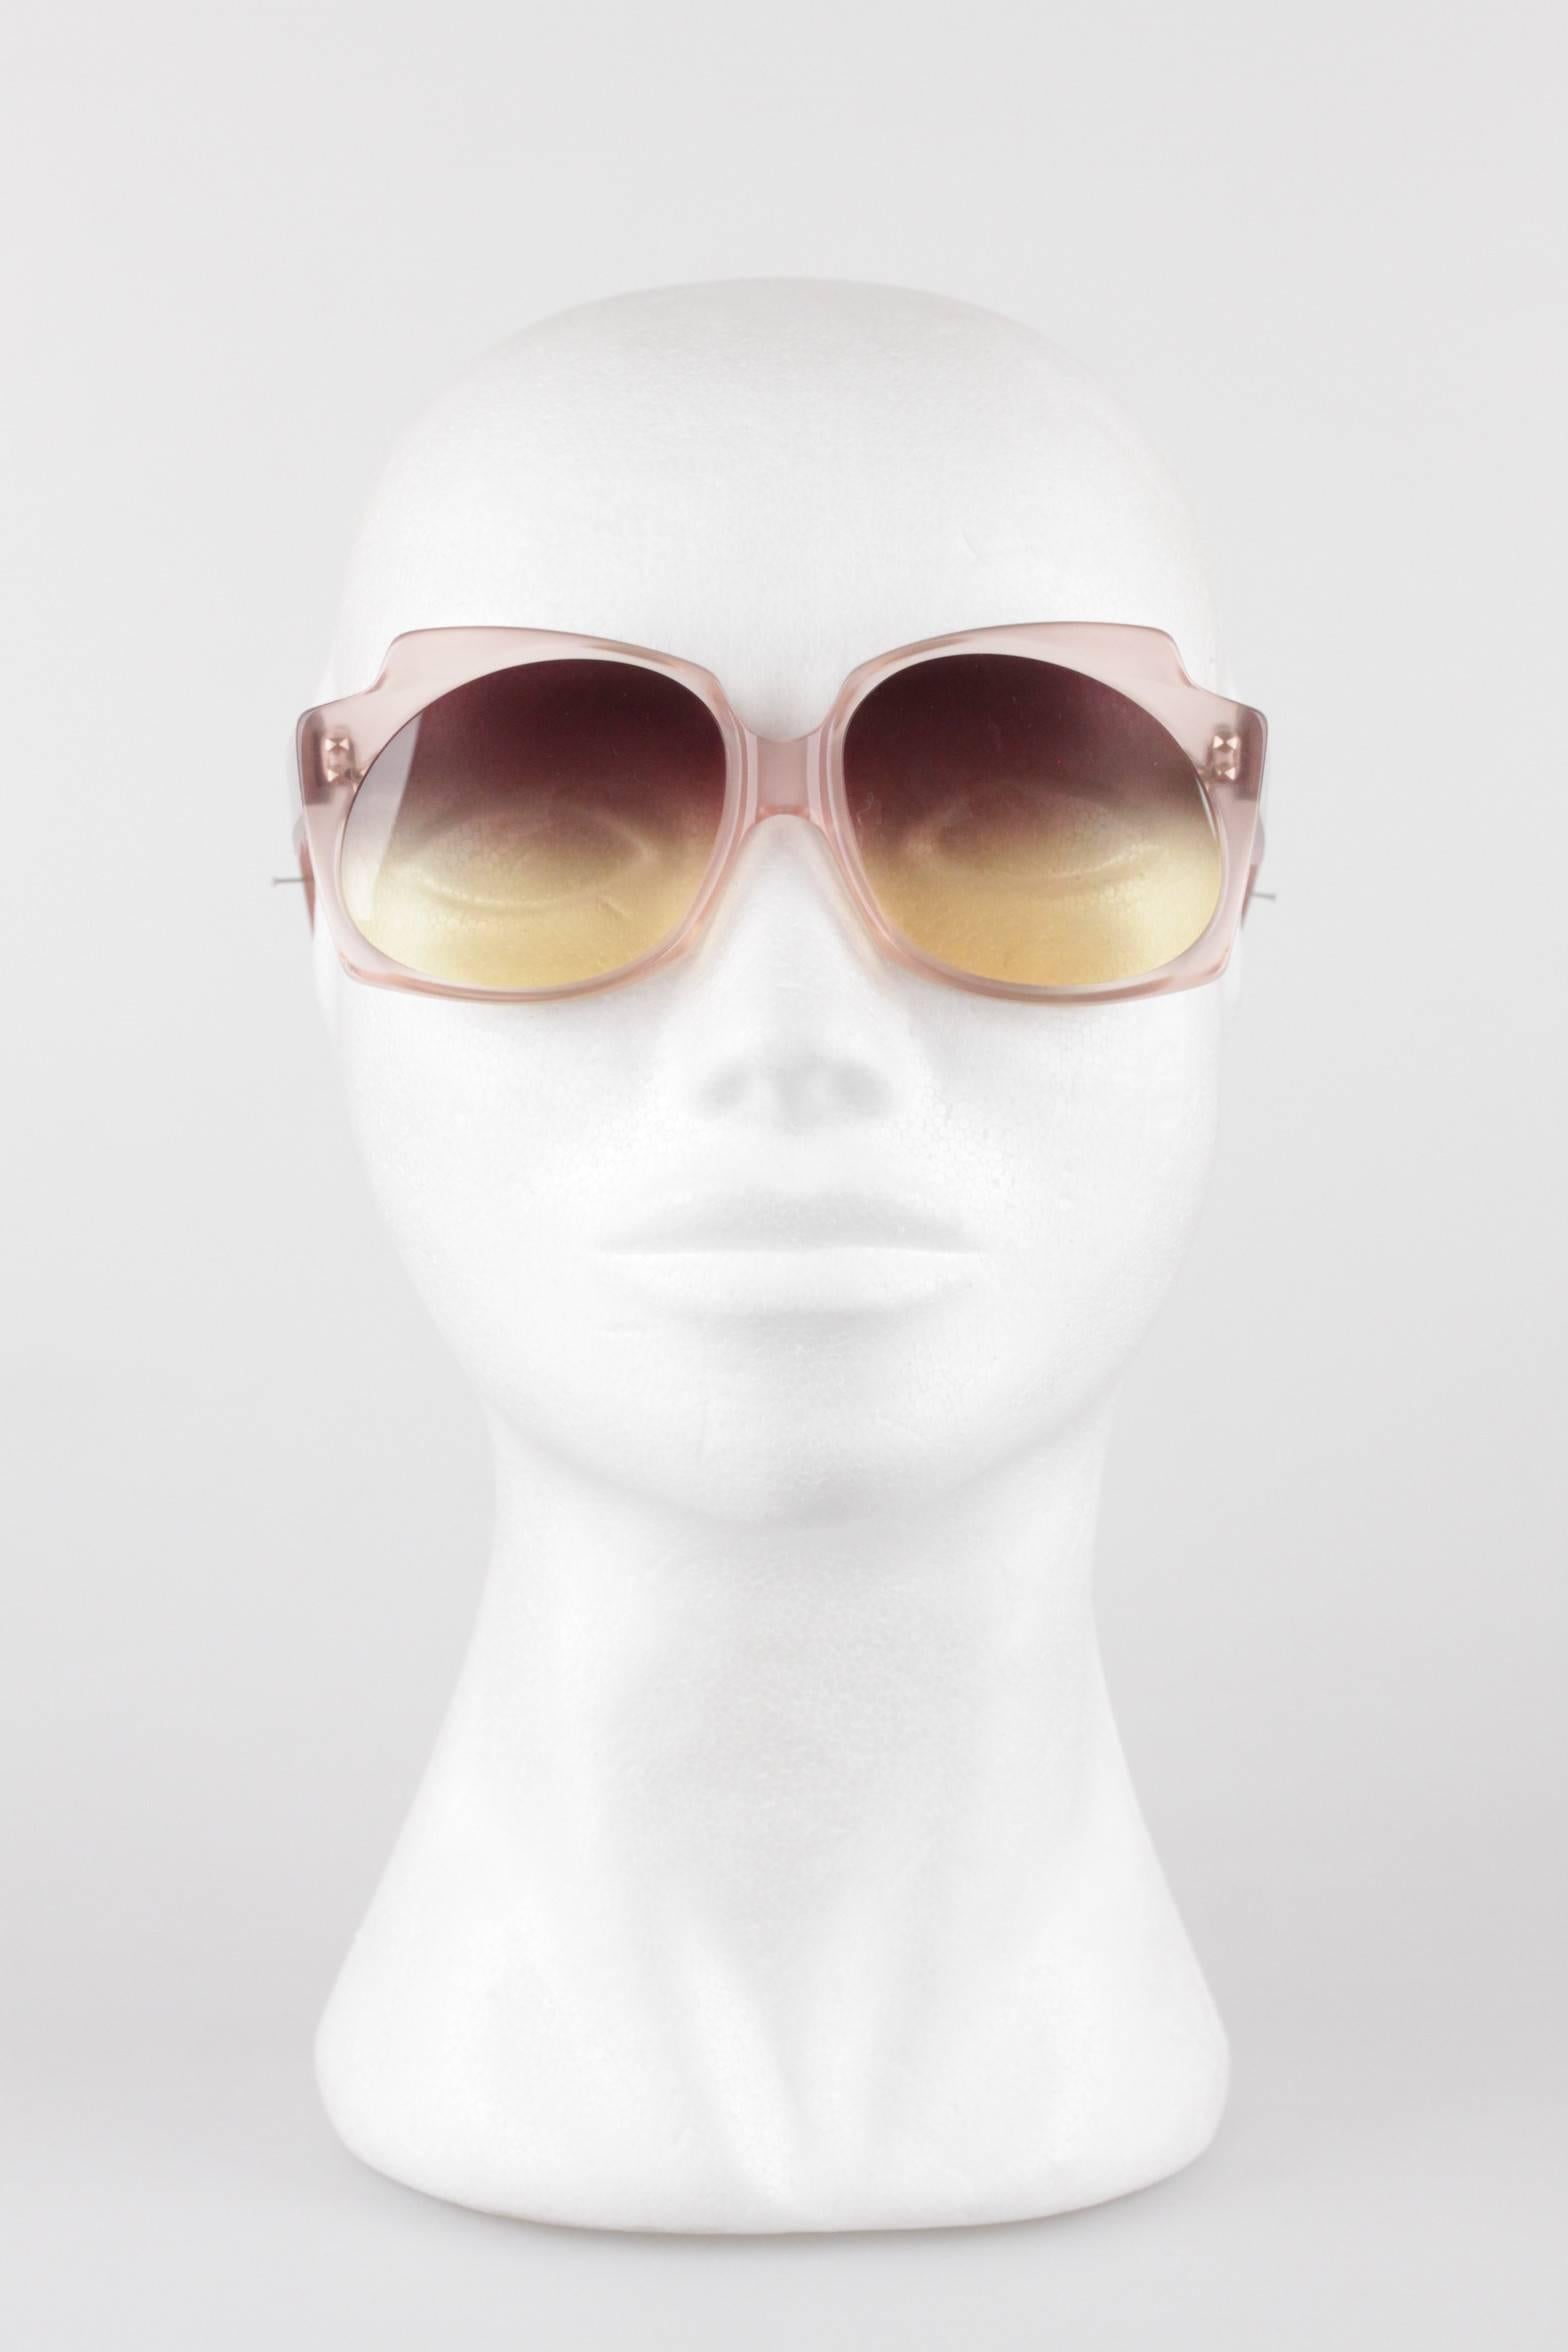 YVES SAINT LAURENT Vintage MINT RARE DIVA Pink Sunglasses NYMPHALIS 3